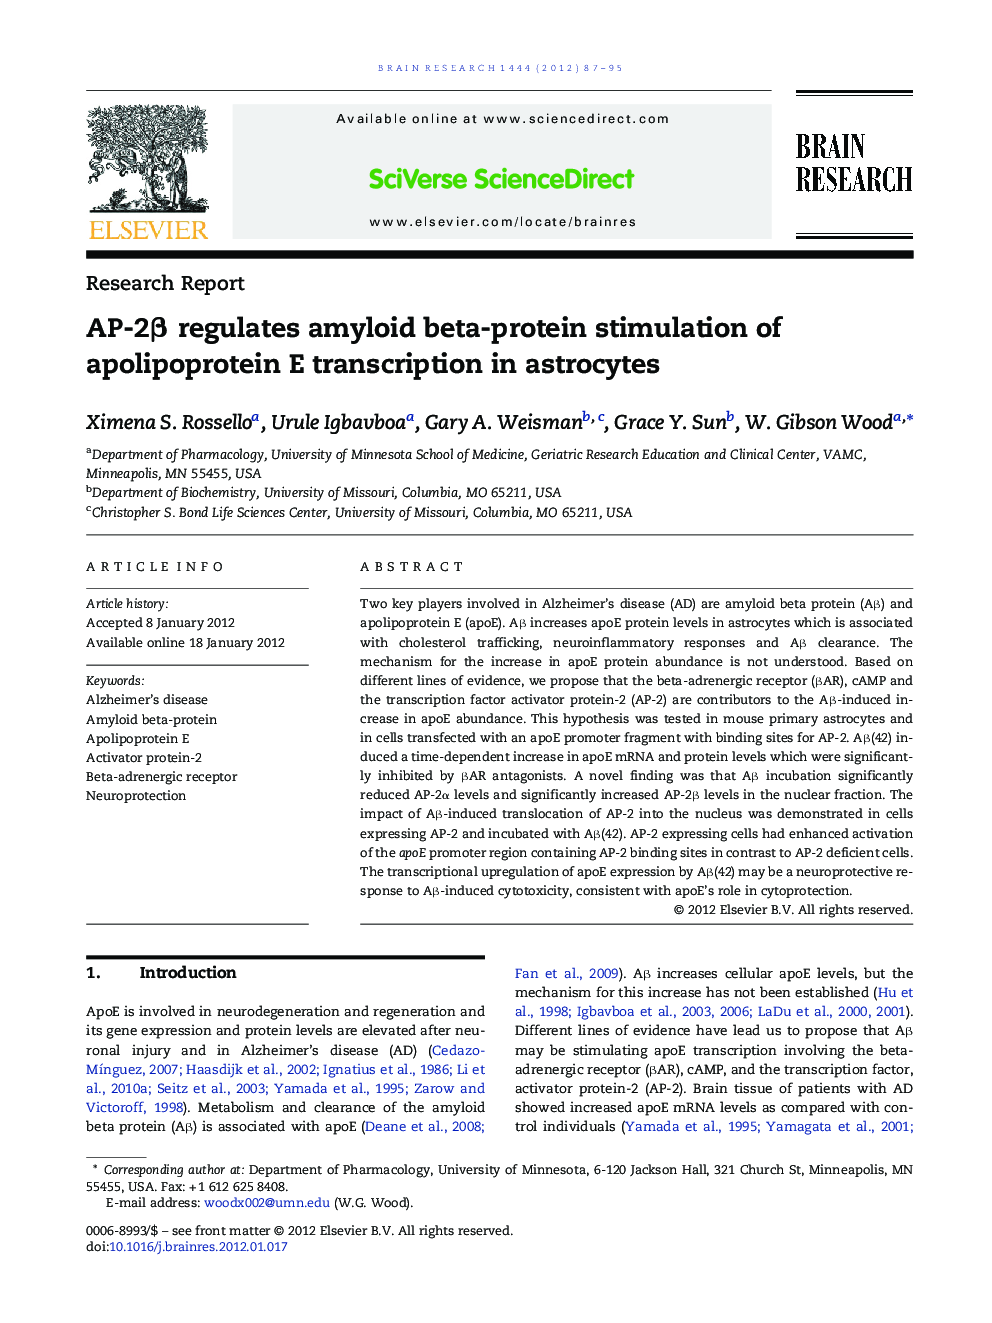 AP-2β regulates amyloid beta-protein stimulation of apolipoprotein E transcription in astrocytes